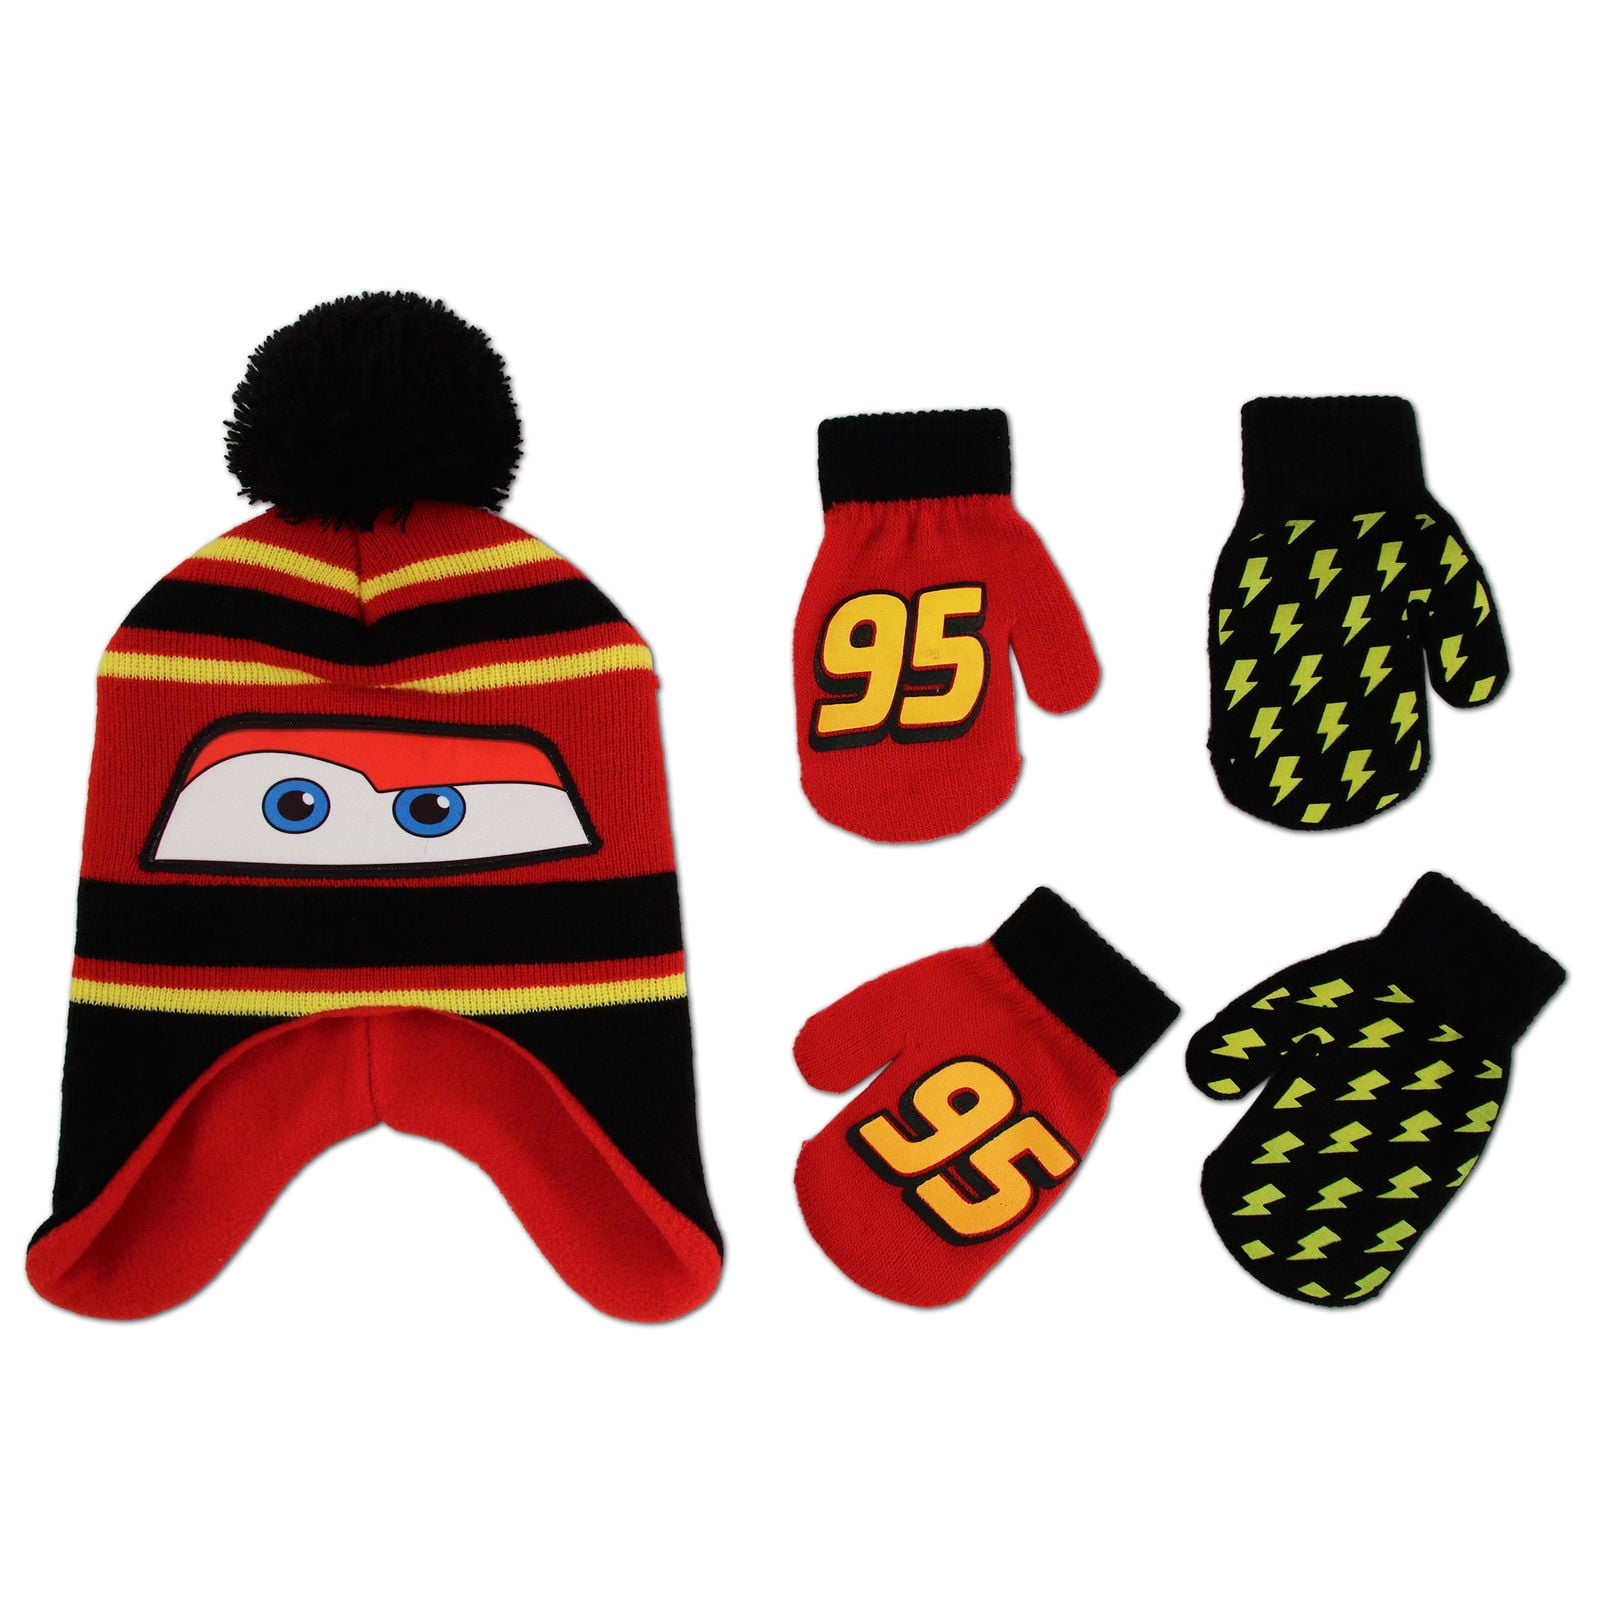 Car Lightning McQueen Winter Hat & Mittens or Gloves Set Disney Boys Mickey Mouse Toddler/Little Boys 